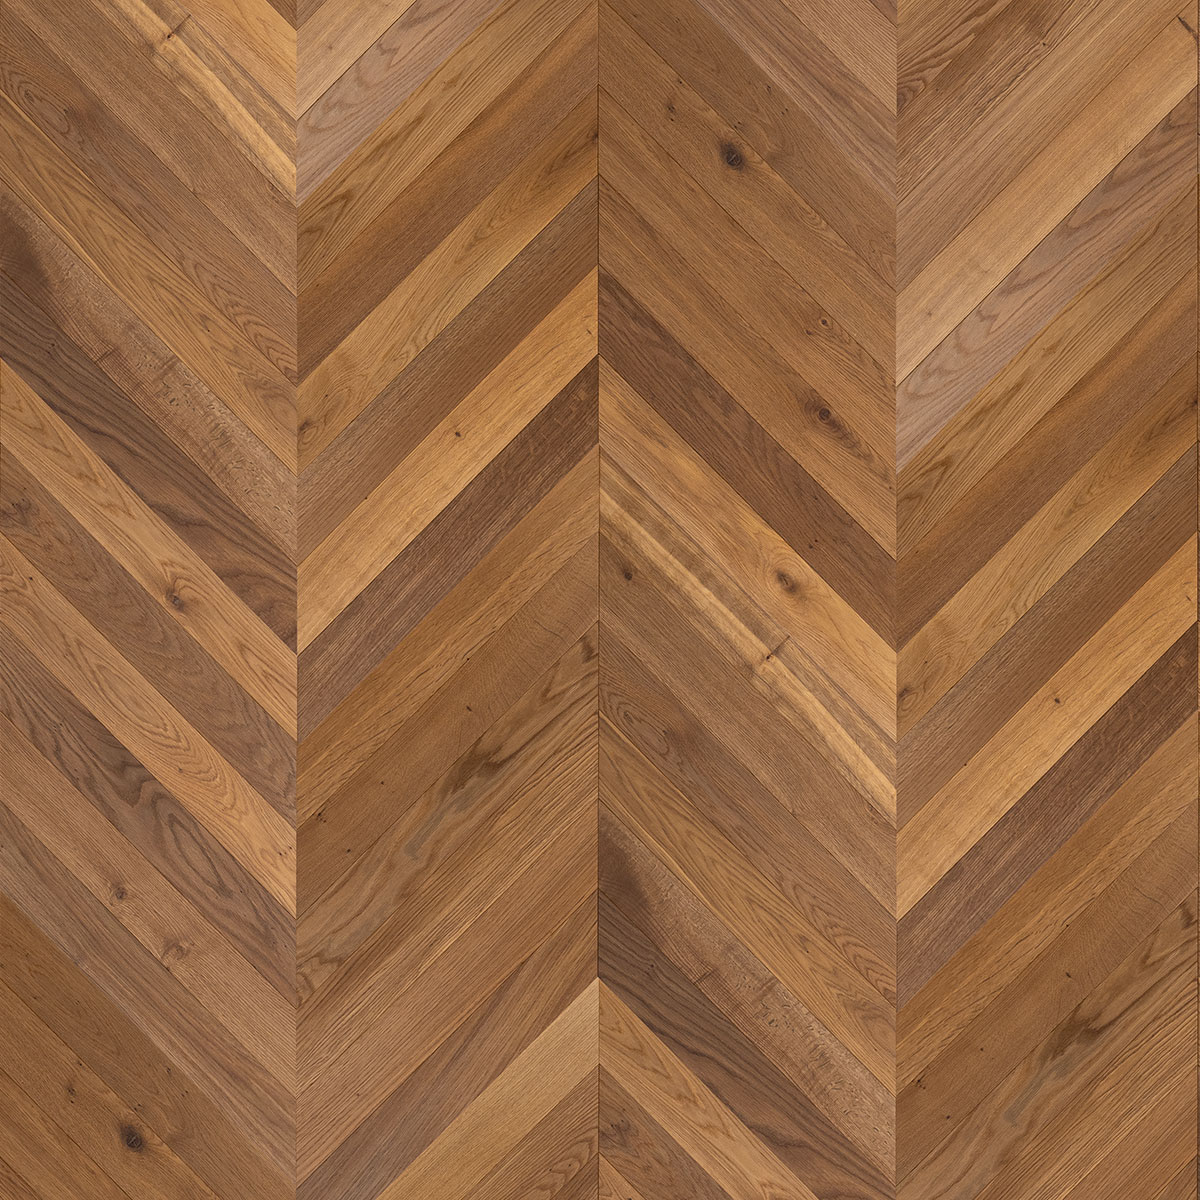 Engineered oak wood flooring named Genoa Sunset